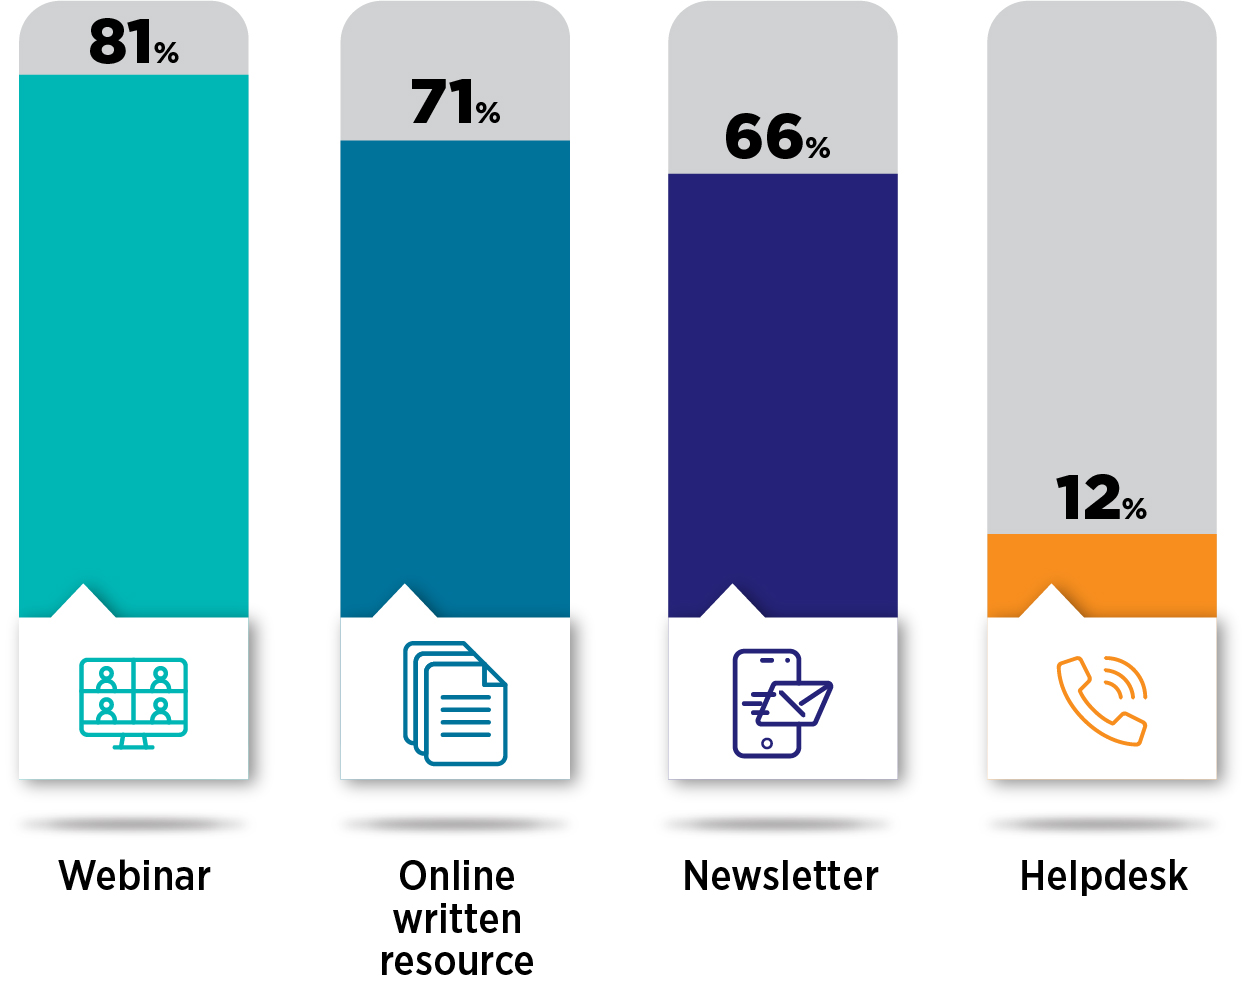 81% - Webinar, 71% - Online written resource, 66% - Newsletter, 12% Helpdesk